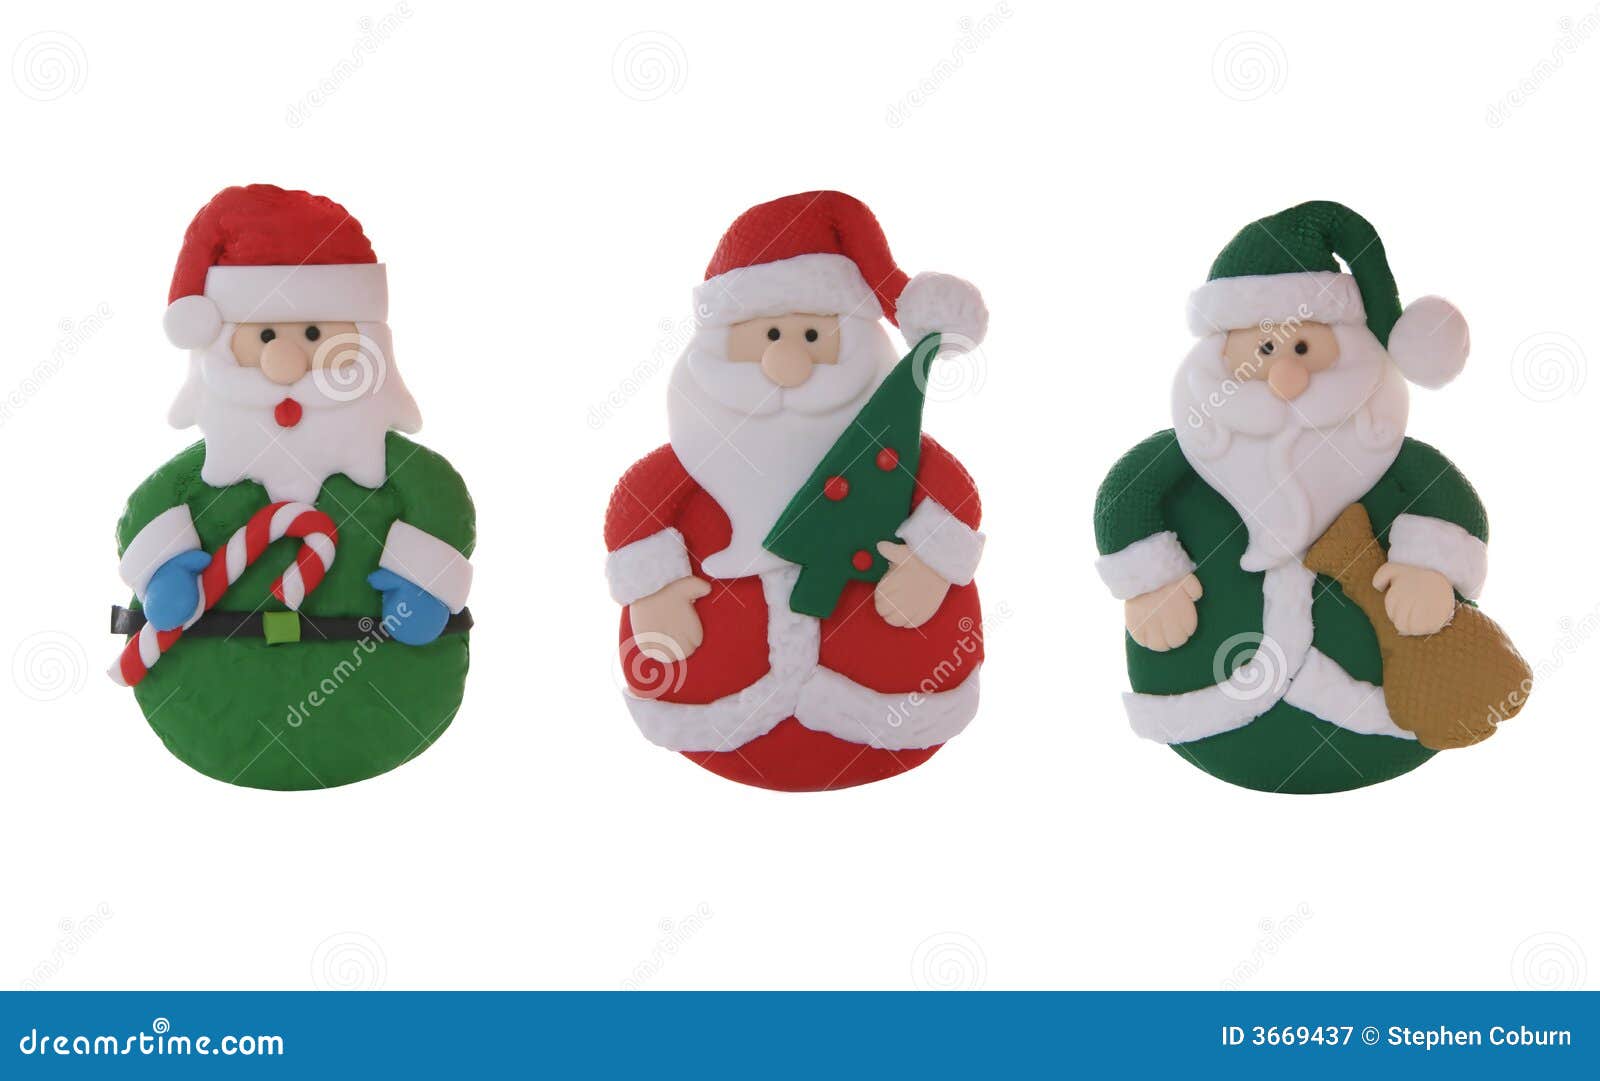 Santa Claus stock image. Image of cane, christmas, gift - 3669437